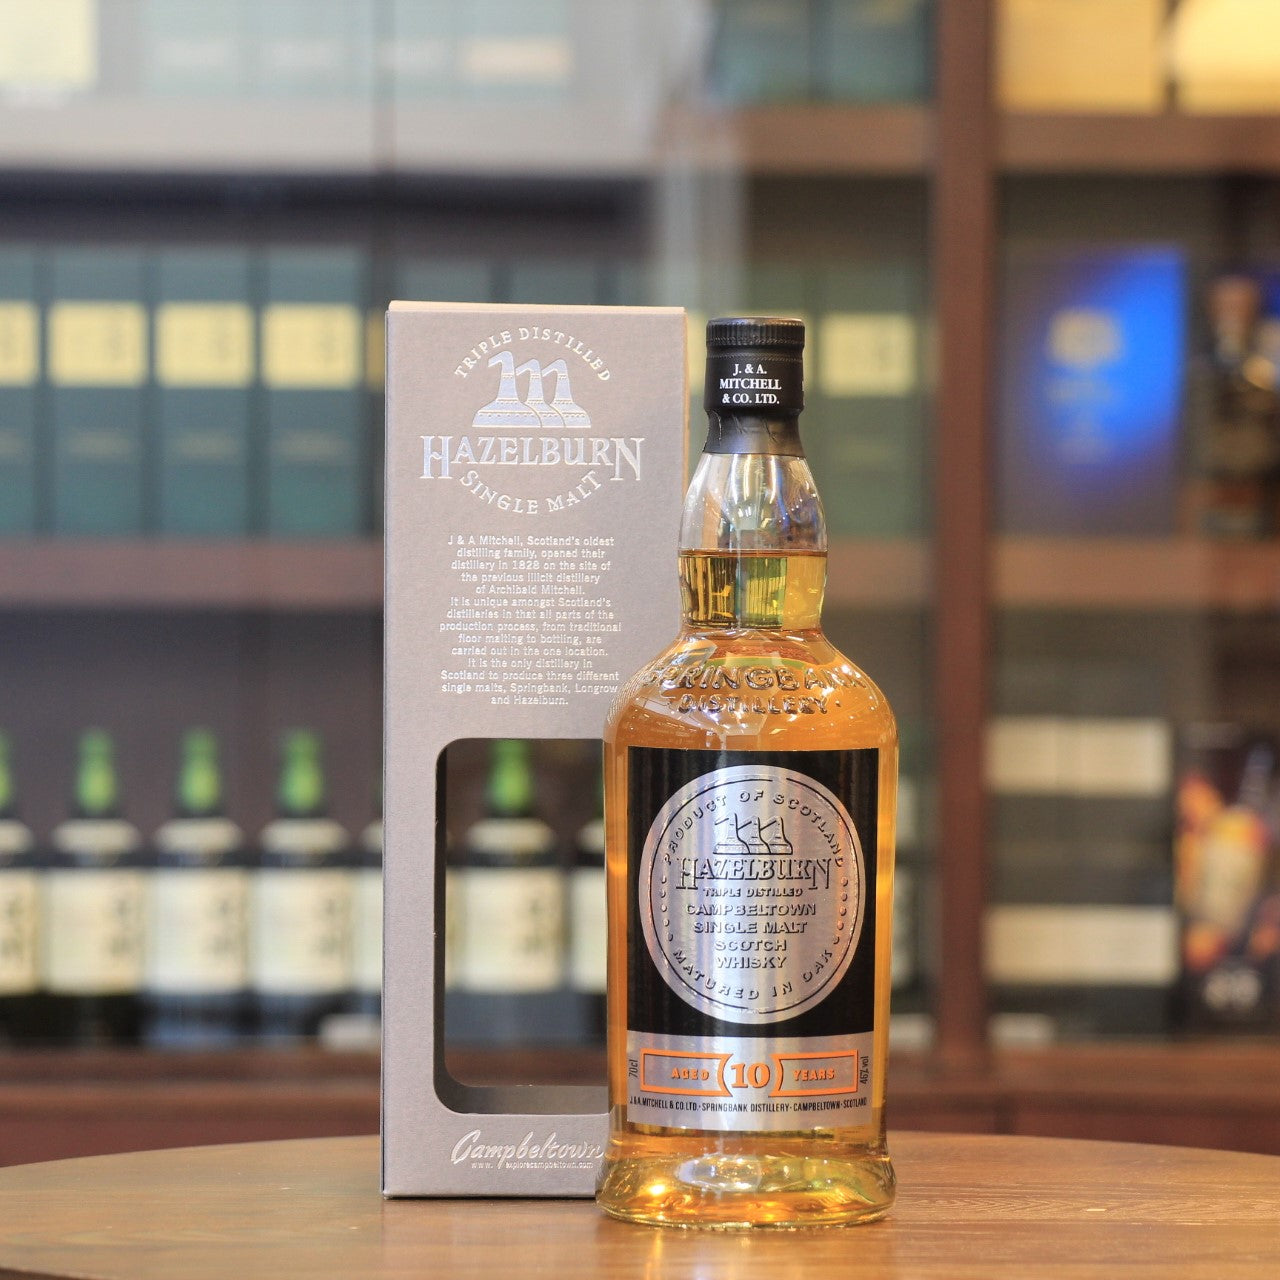 Hazelburn 10 年蘇格蘭單一麥芽威士忌 2017 年發布